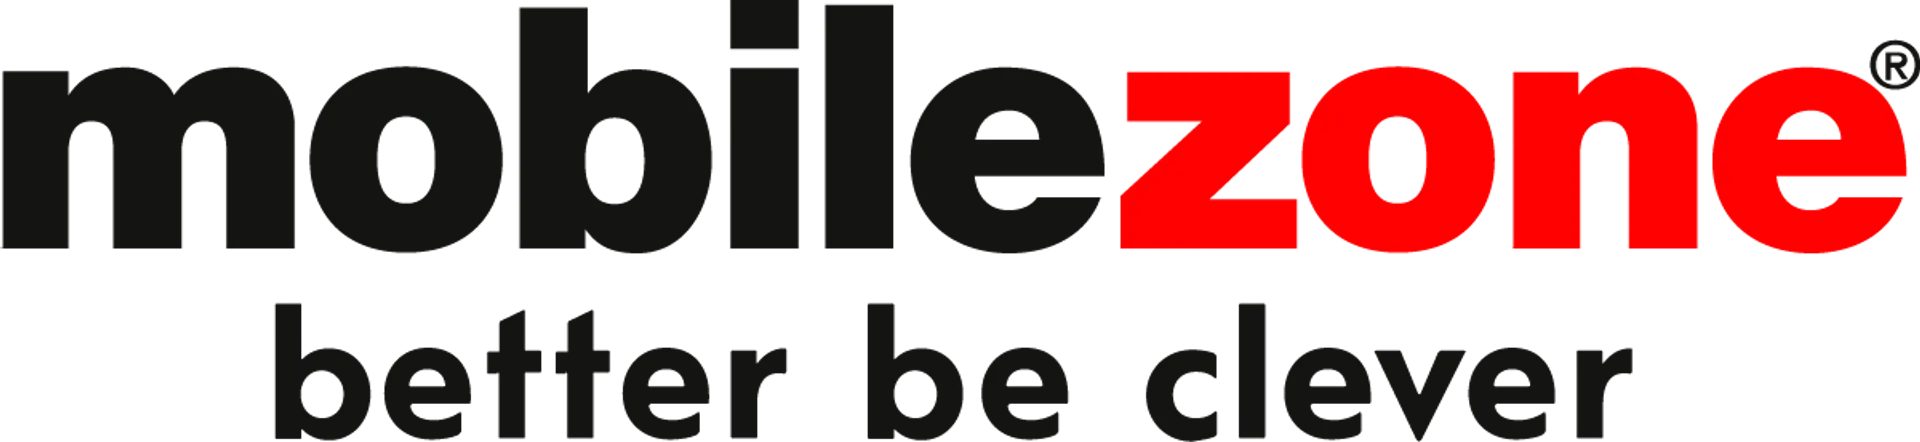 MOBILEZONE logo